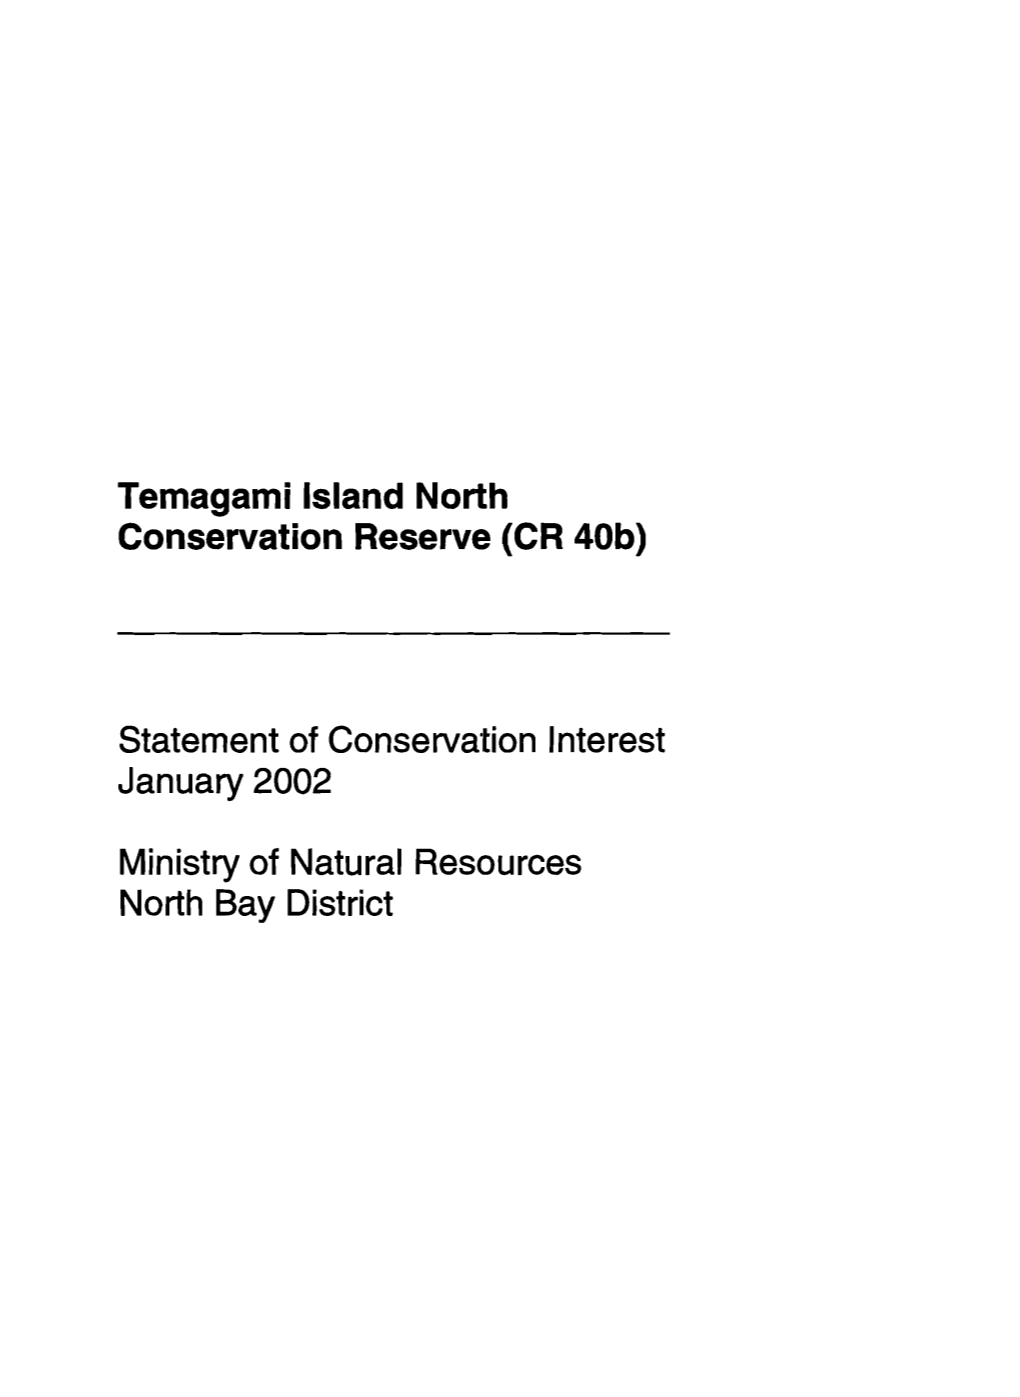 Conservation Reserve (CR 40B)